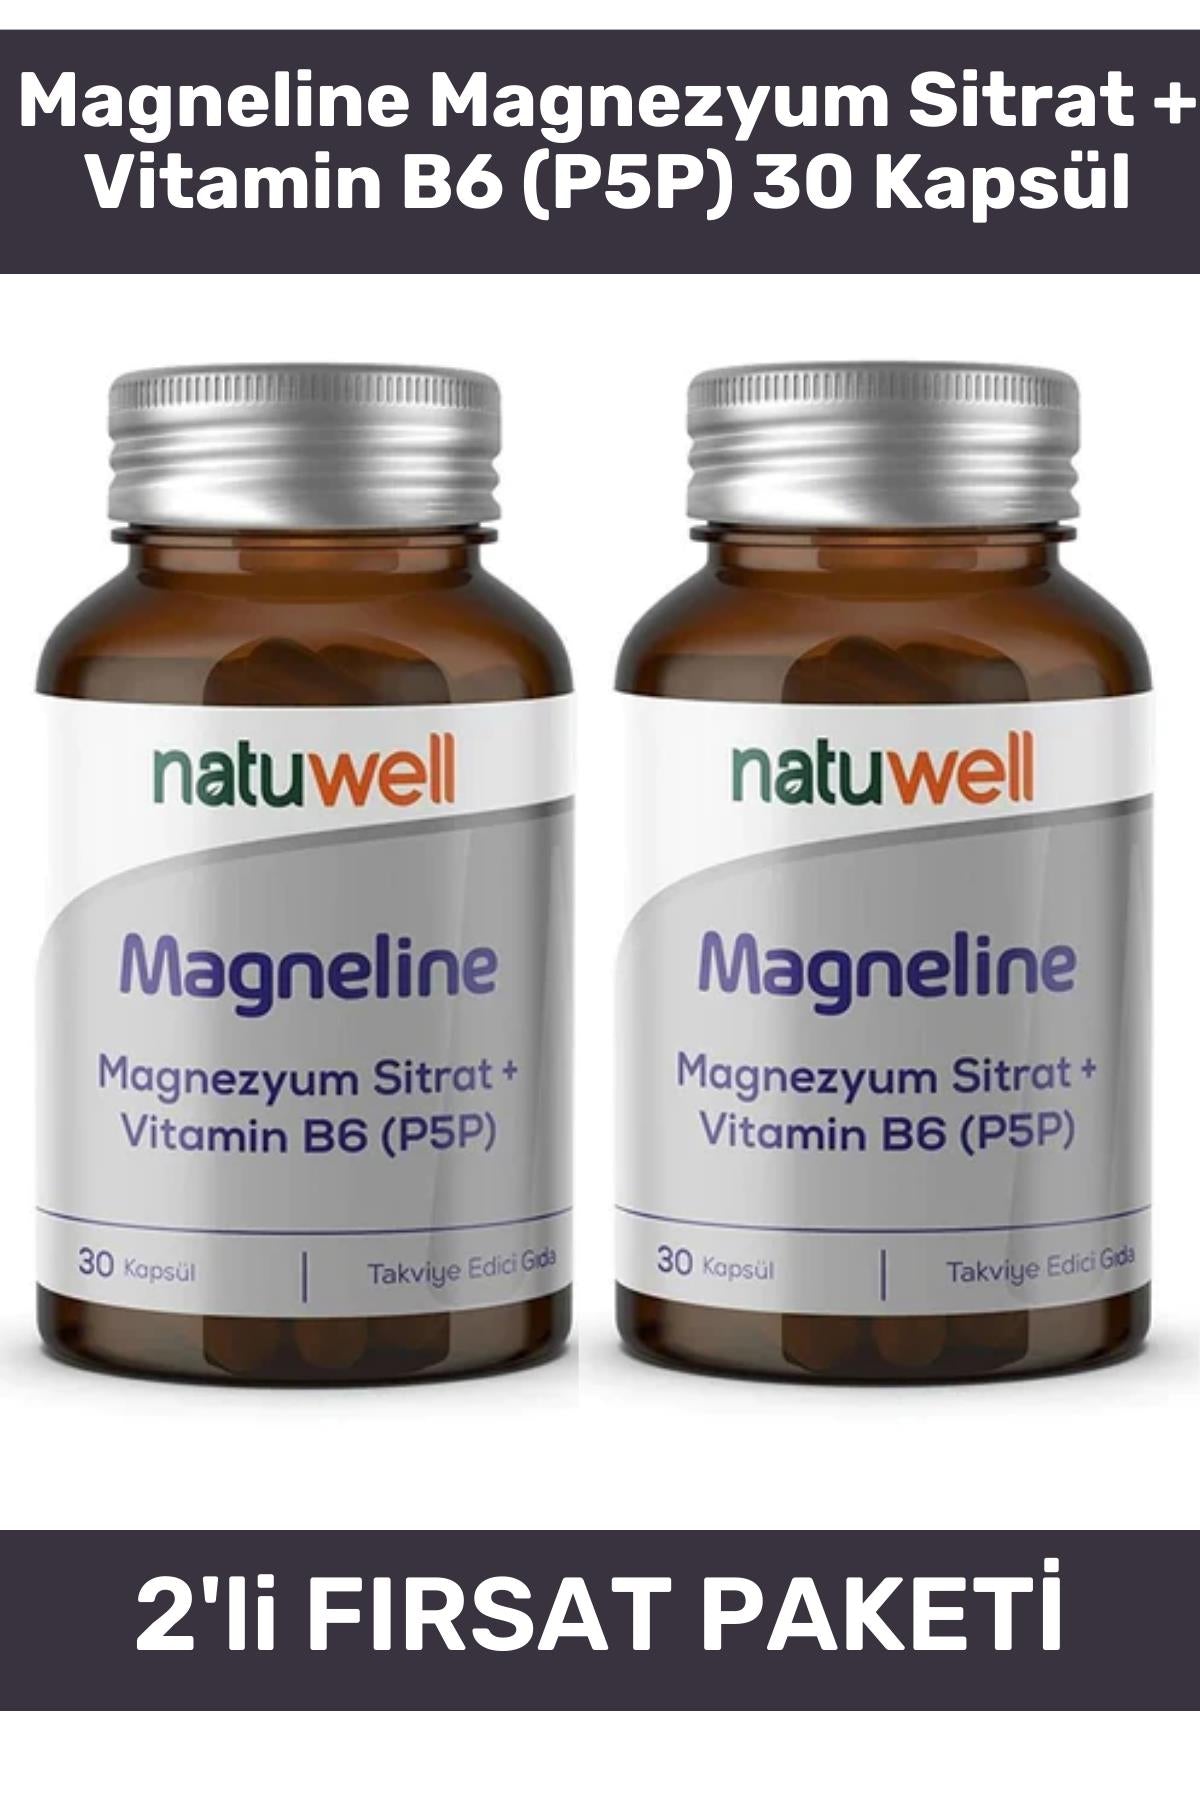 Natuwell Magneline Magnezyum Sitrat + Vitamin B6 (P5P) 30 Kapsül 2'li Paket